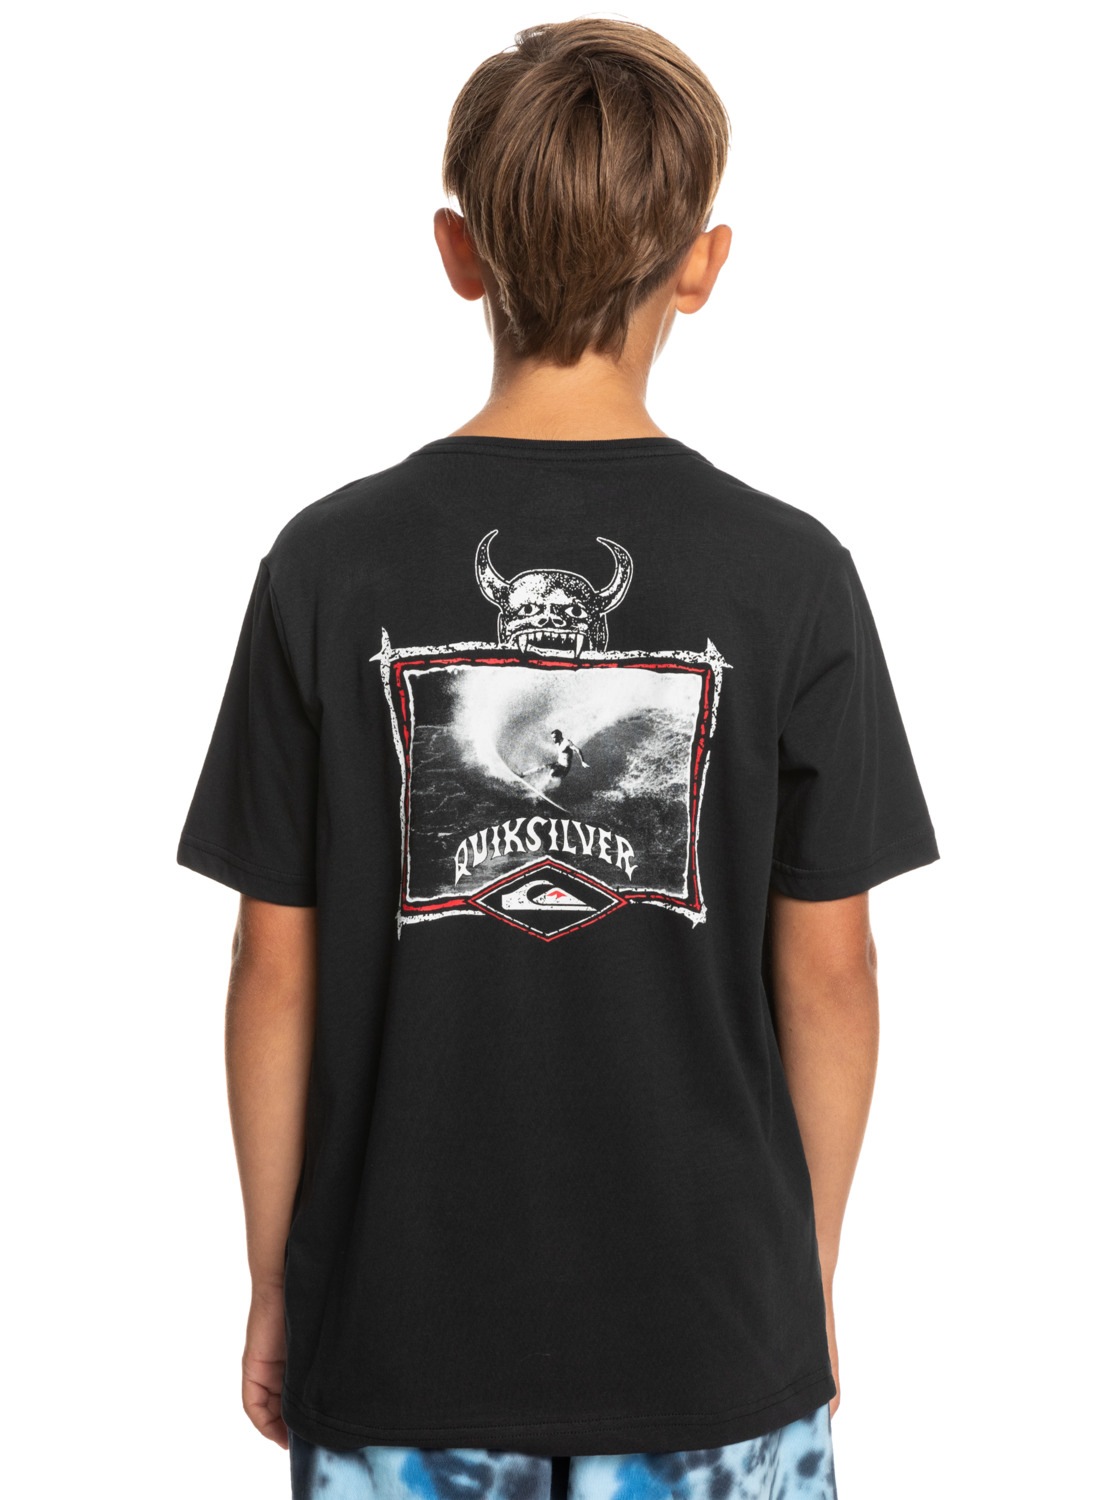 »Surfer Fortune« T-Shirt Quiksilver bestellen Of